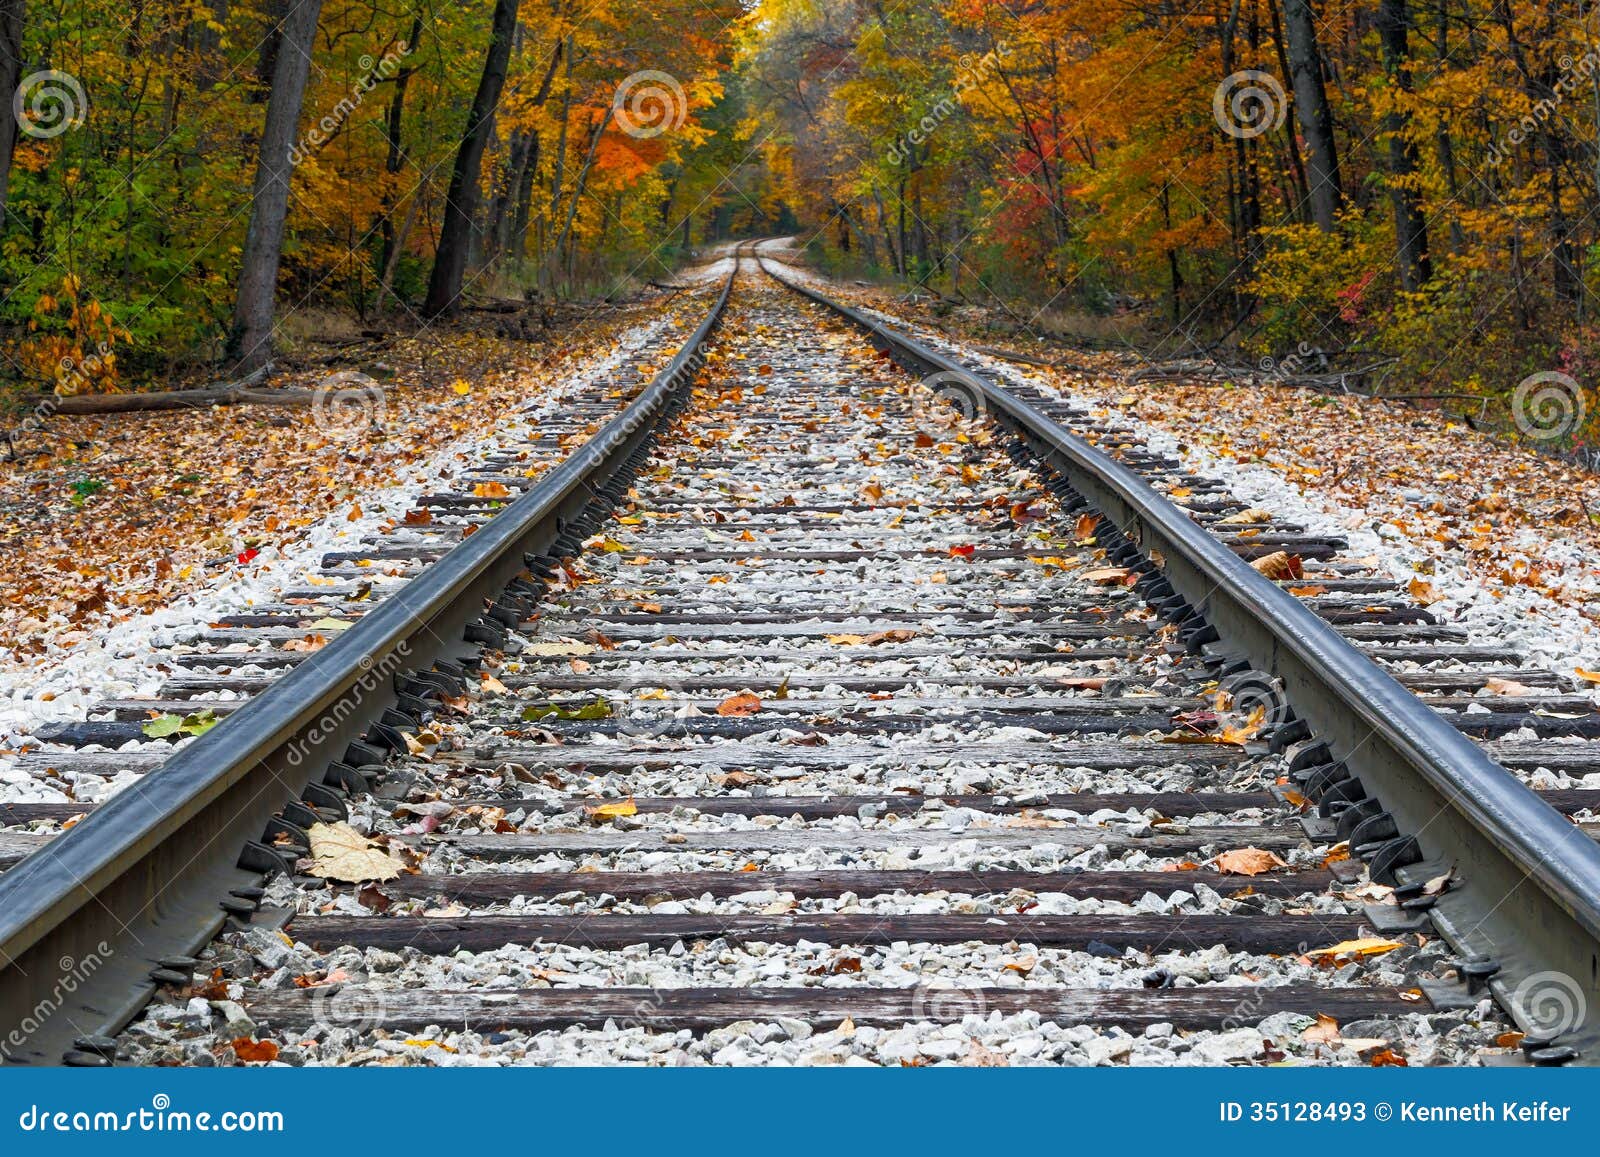 Shiny steel railroad tracks lead the eye trough trees with vivid fall 